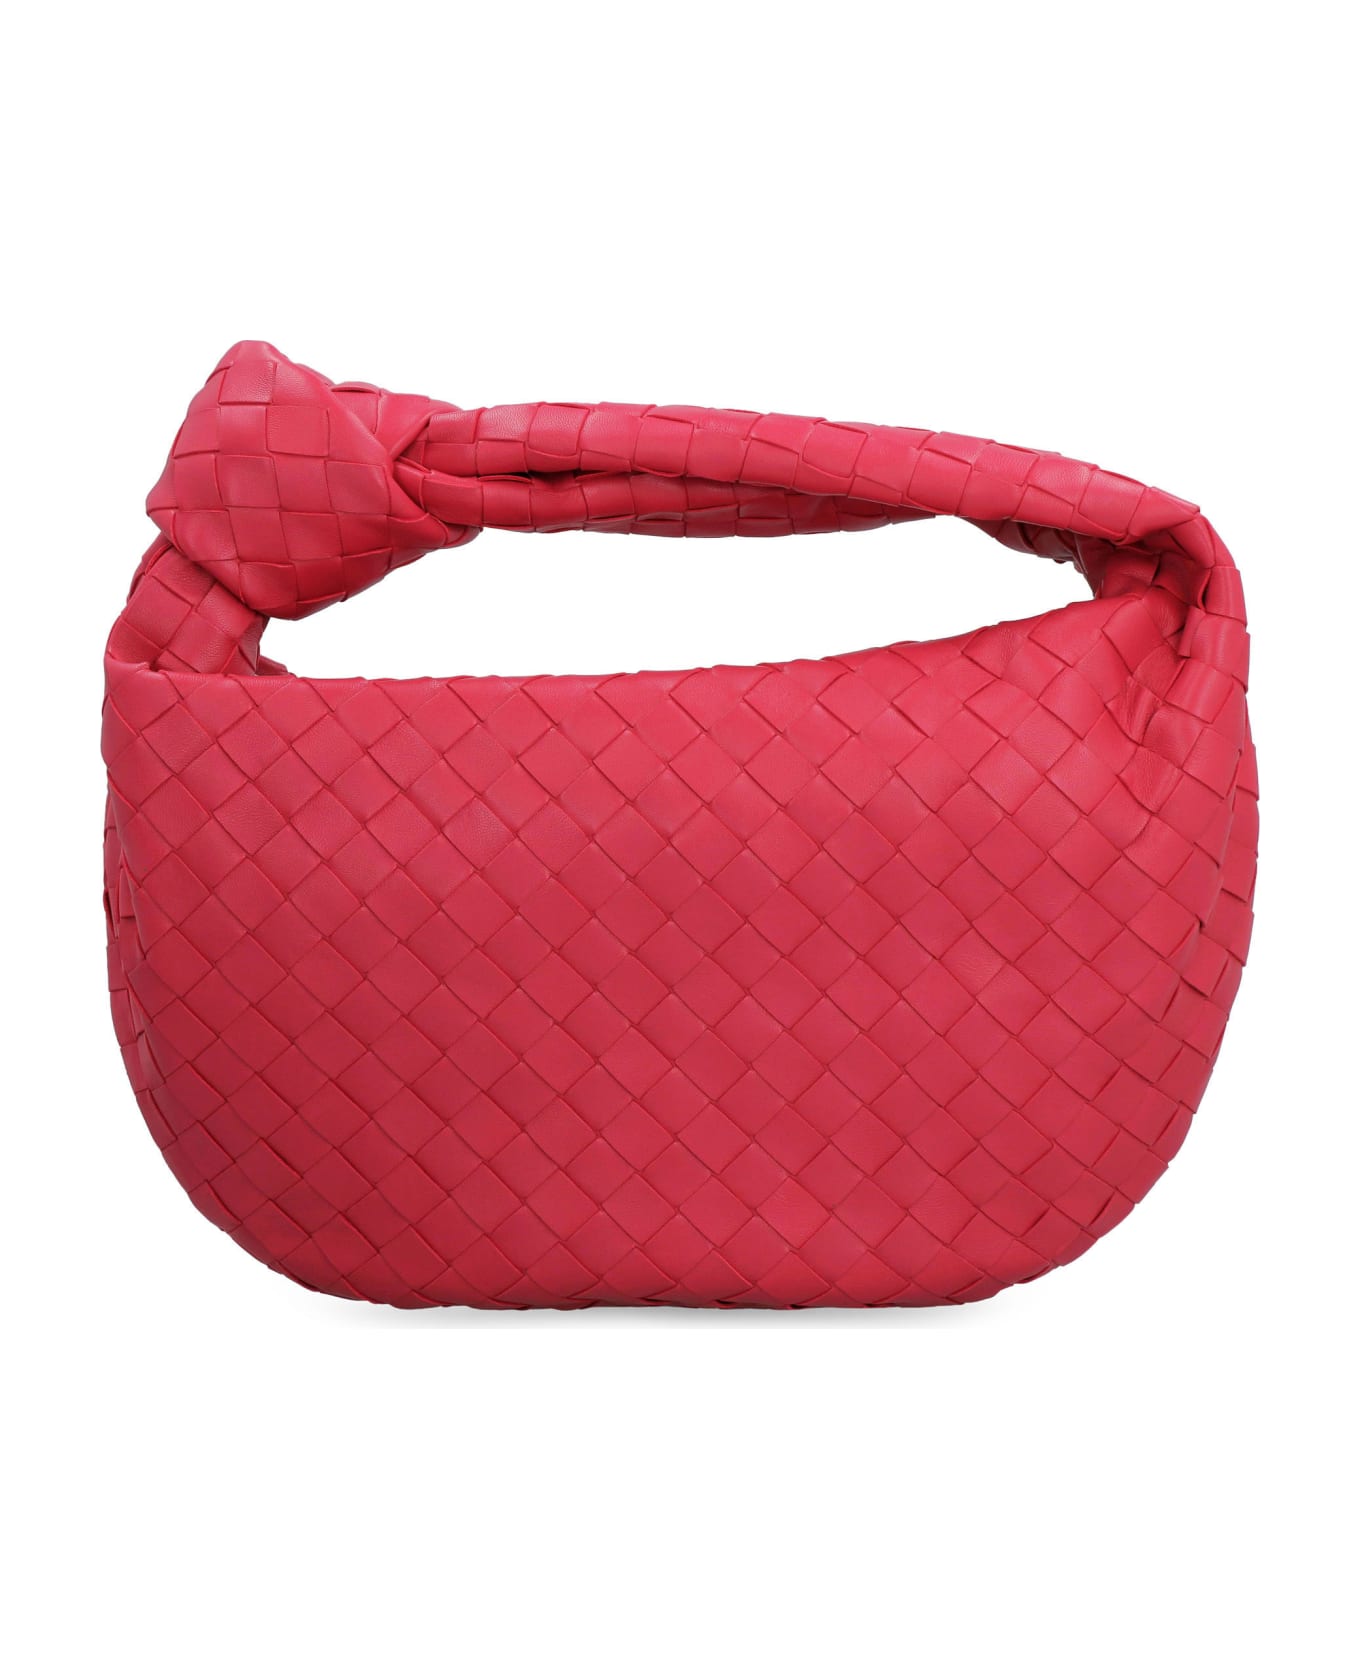 Bottega Veneta Teen Jodie Leather Shoulder Bag - Red